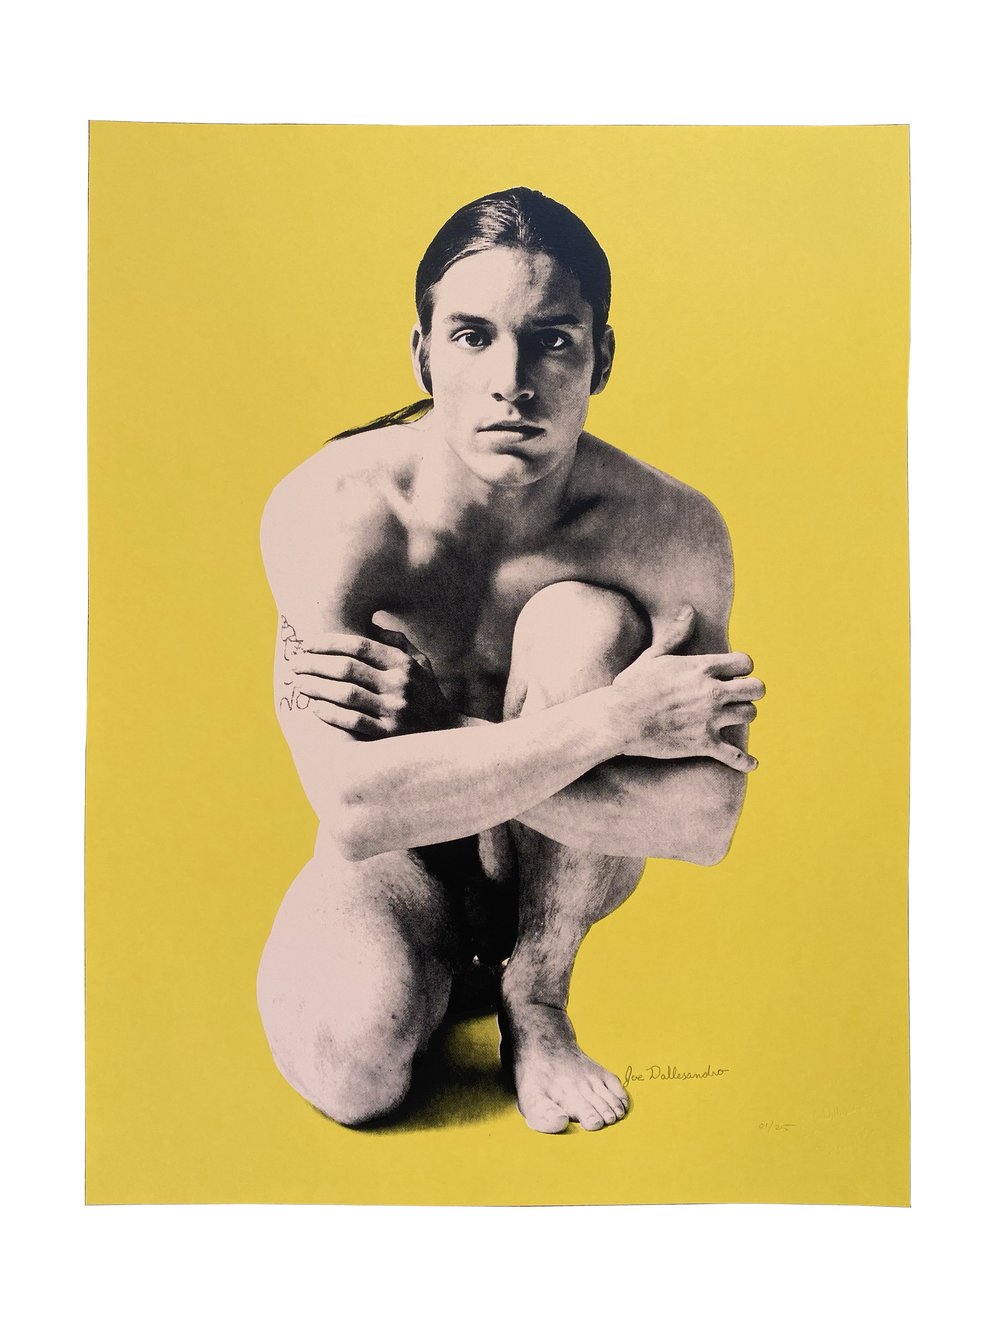 Image of Photo 1970 Jack Mitchell Print : Yellow Edition